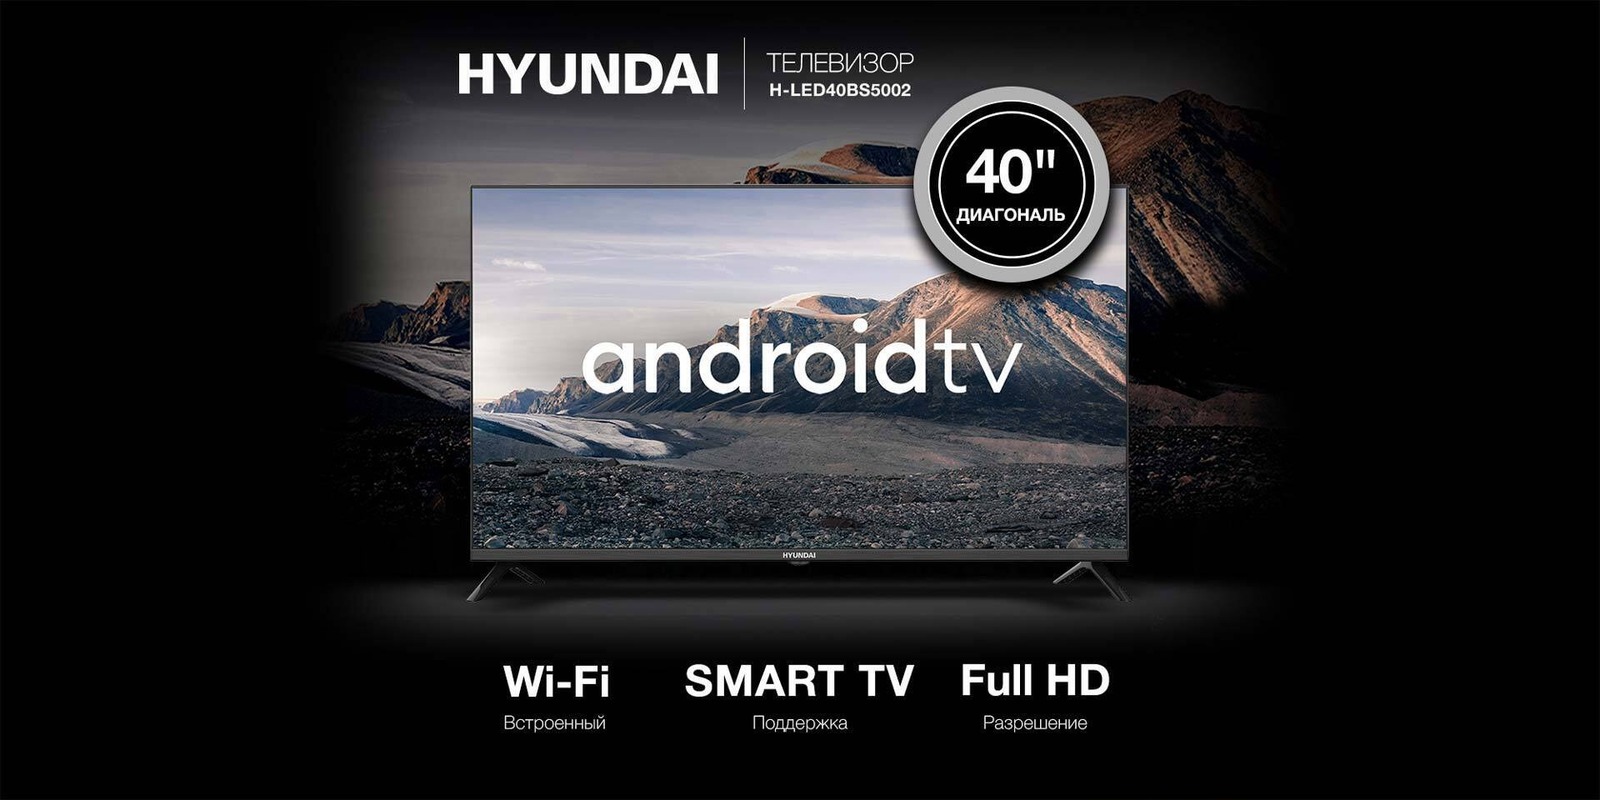 Led40bs5002 телевизор hyundai. Hyundai h-led40bs5002. H-led40bs5002. H-led40bs5002 характеристики. H-led40bs5002 обзор.